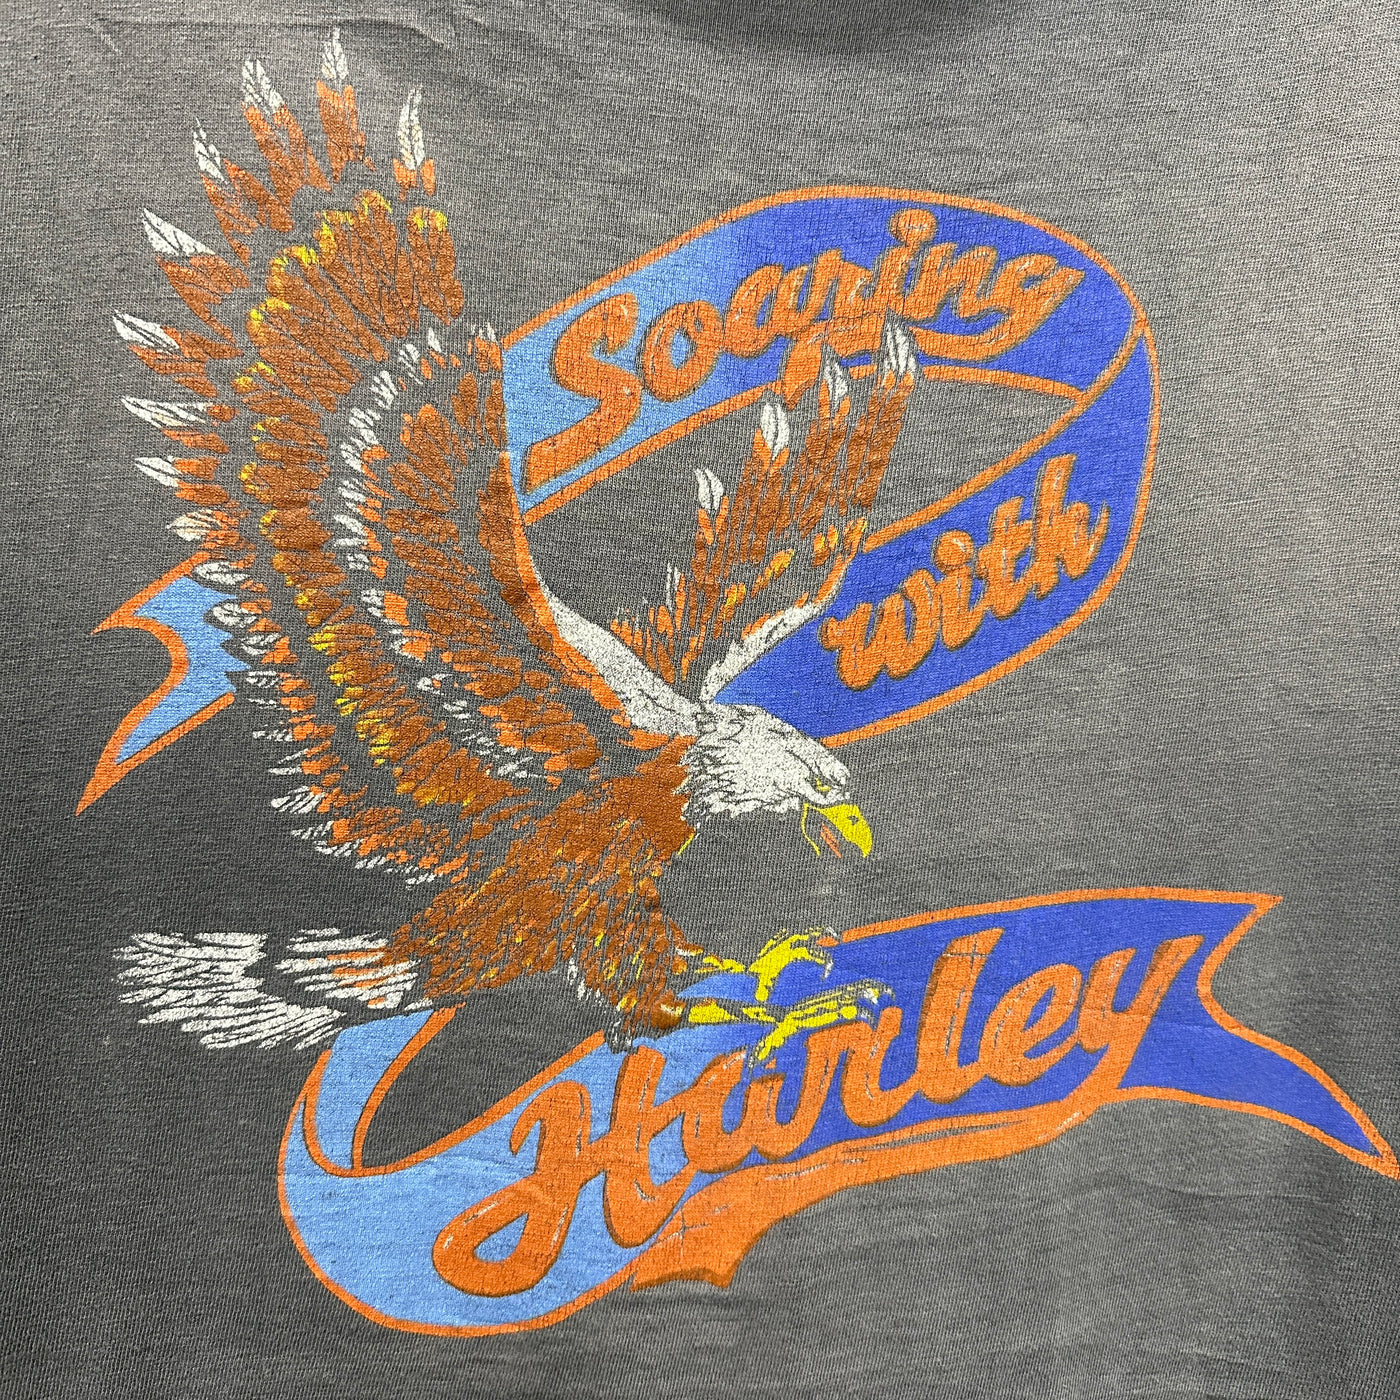 90's "Soaring With Harley" American Eagle Grey Harley Davidson T-shirt sz XL